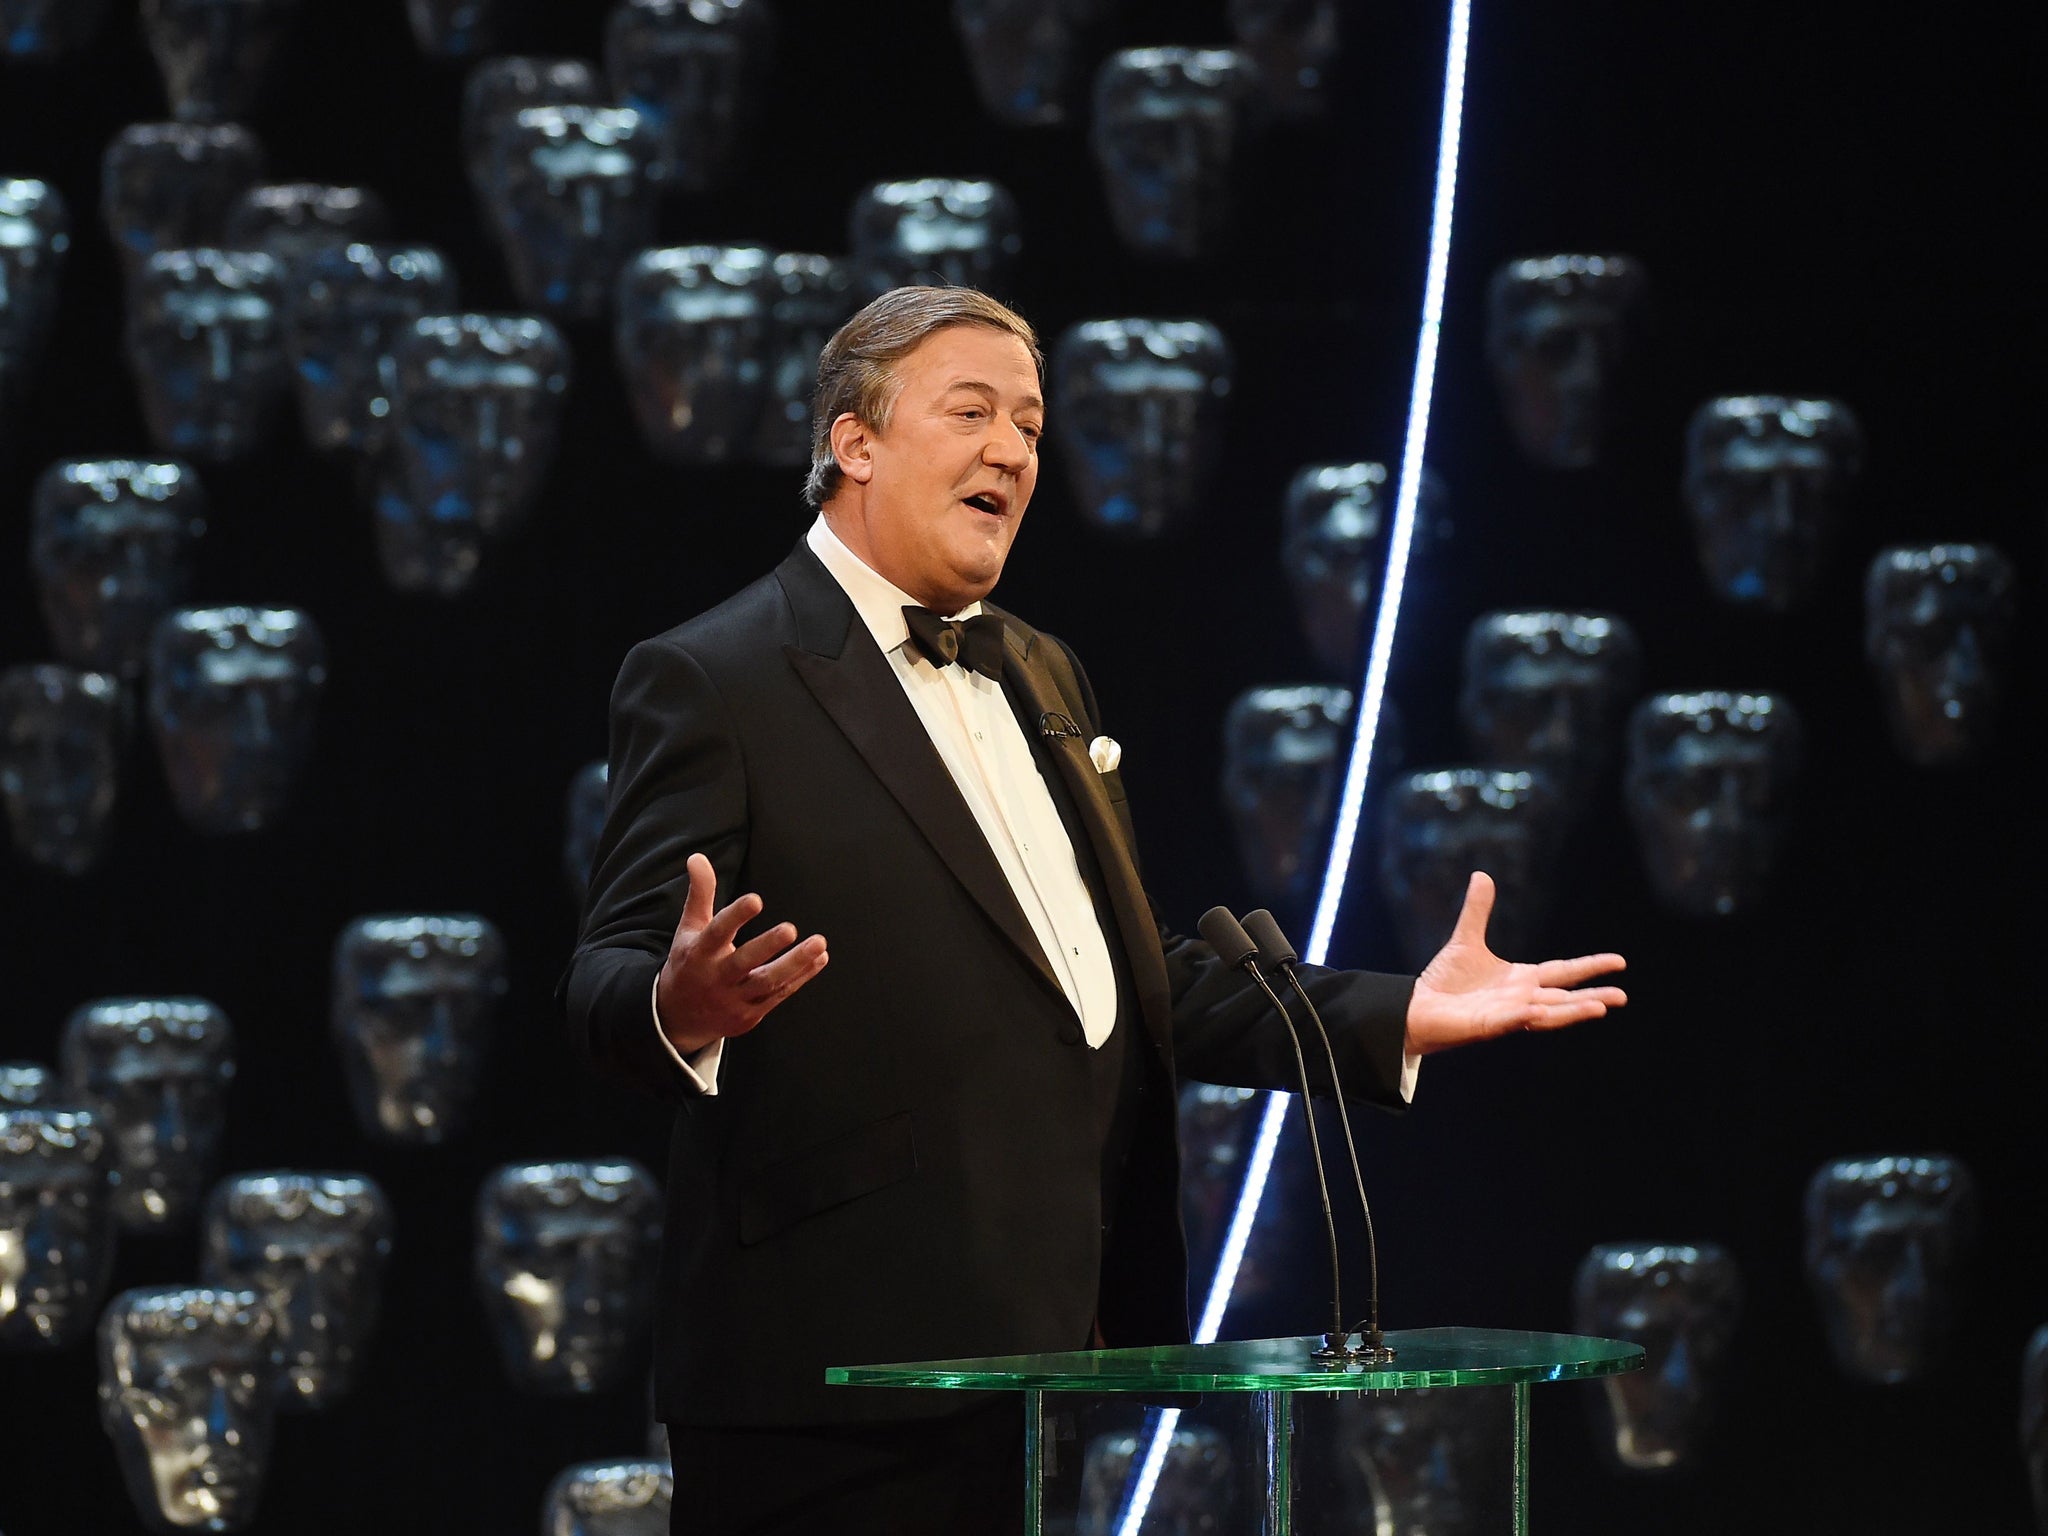 Stephen Fry hosting the 2015 Baftas